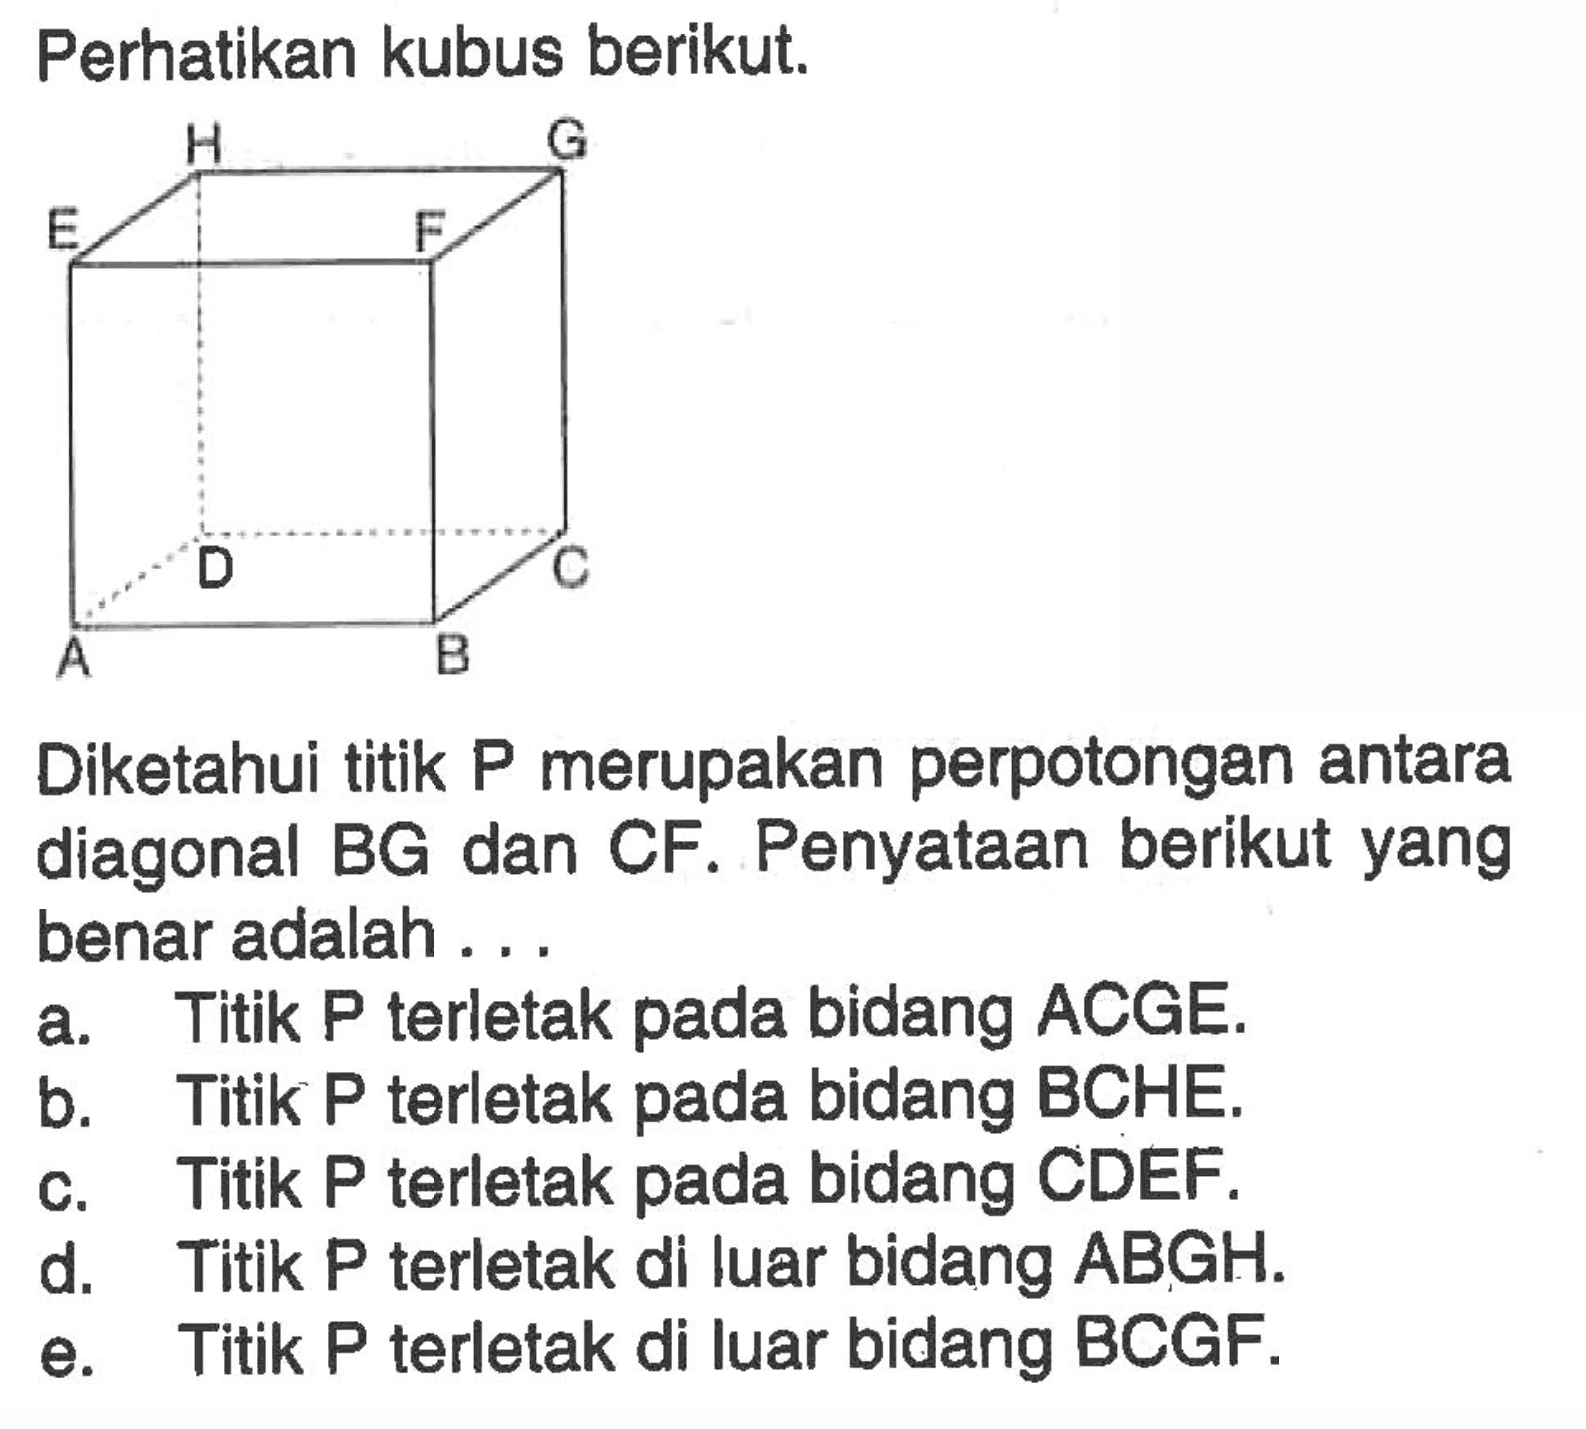 Perhatikan kubus berikut. Diketahui titik P merupakan perpotongan antara diagonal BG dan CF. Penyataan berikut yang benar adalah . . .